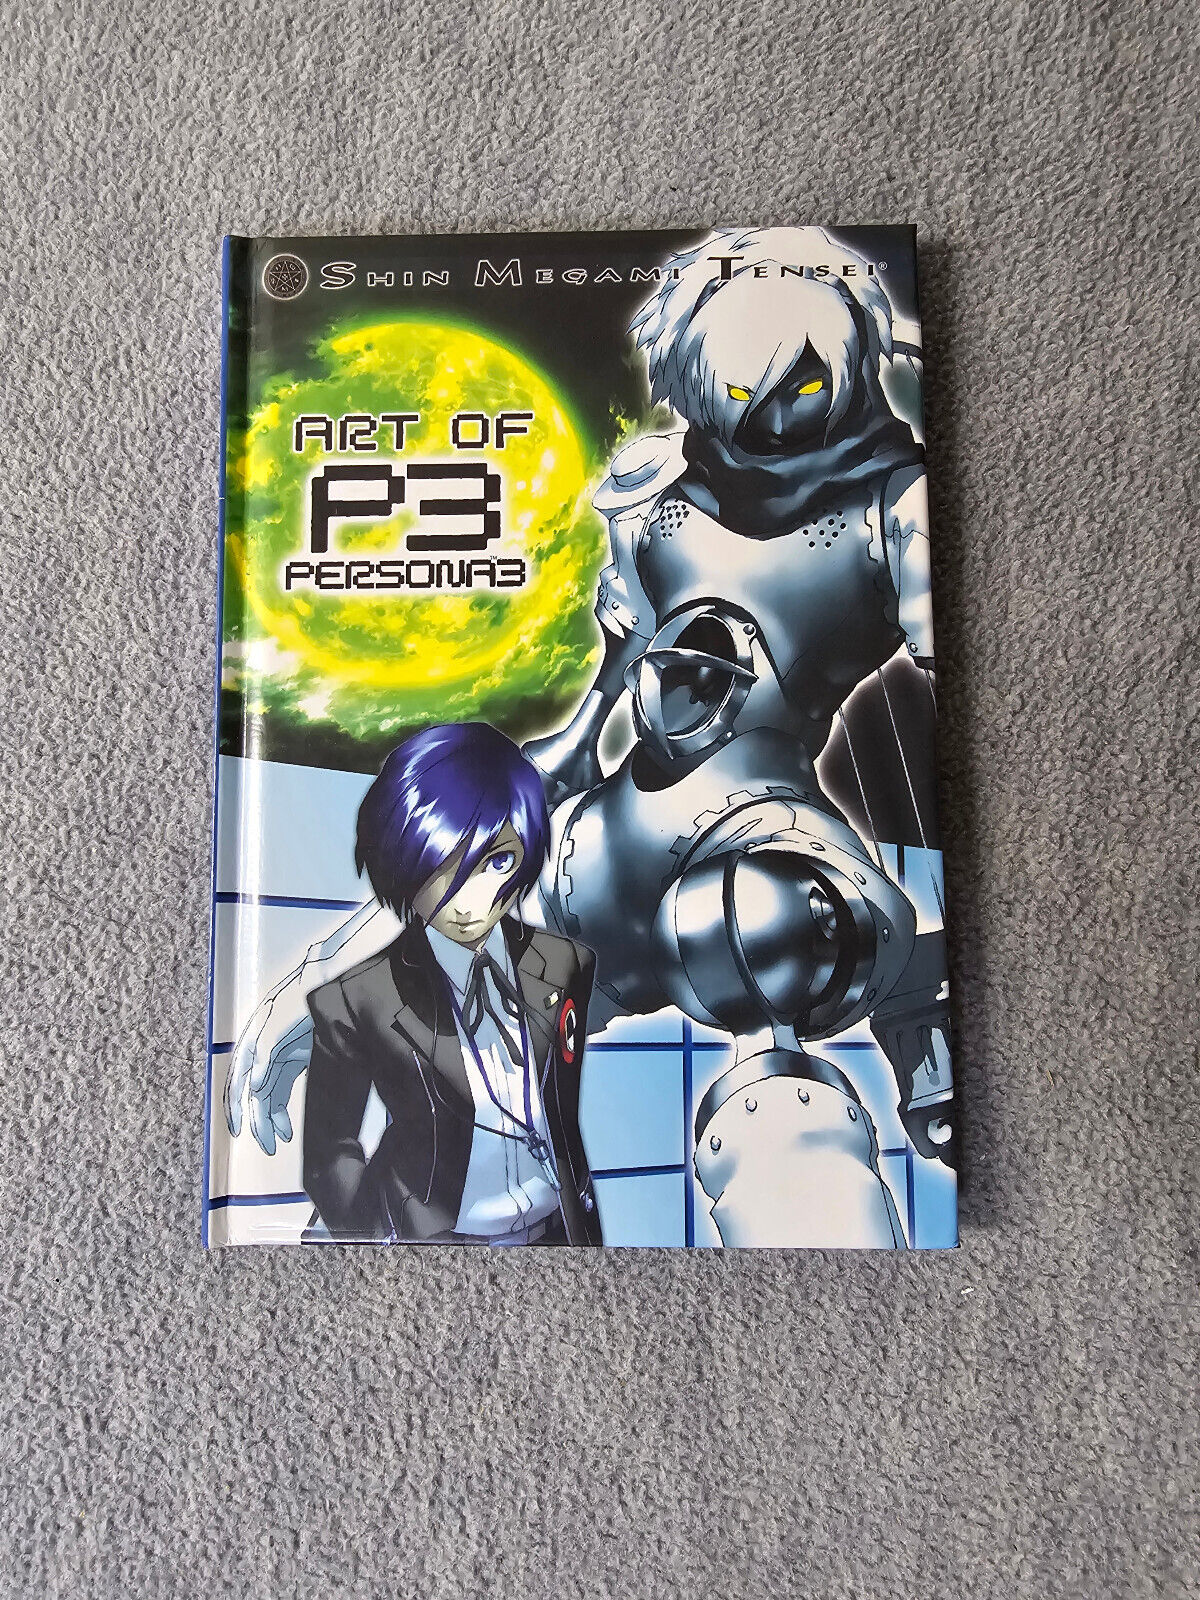 2007 Altus Shin Megami Tensei ART of P3 Persona 3 Hardcover Book ONLY